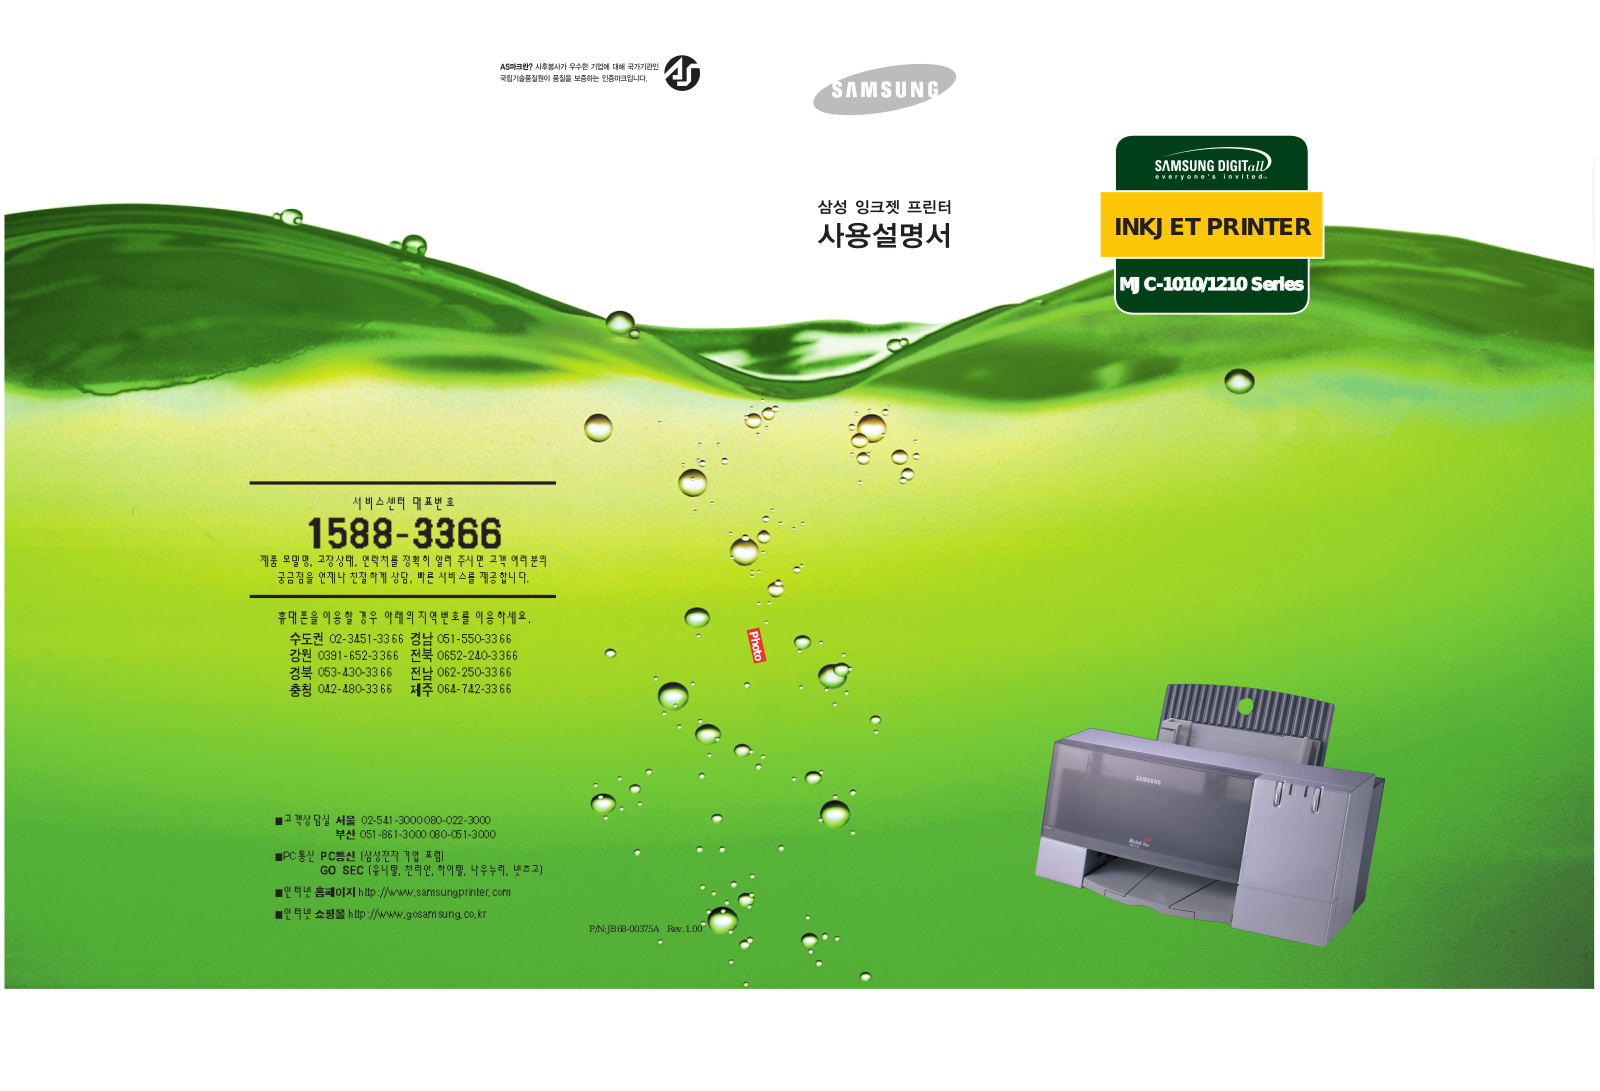 Samsung MJC-1215C, MJC-1115C, MJC-1015C, MJC-1010I User Manual